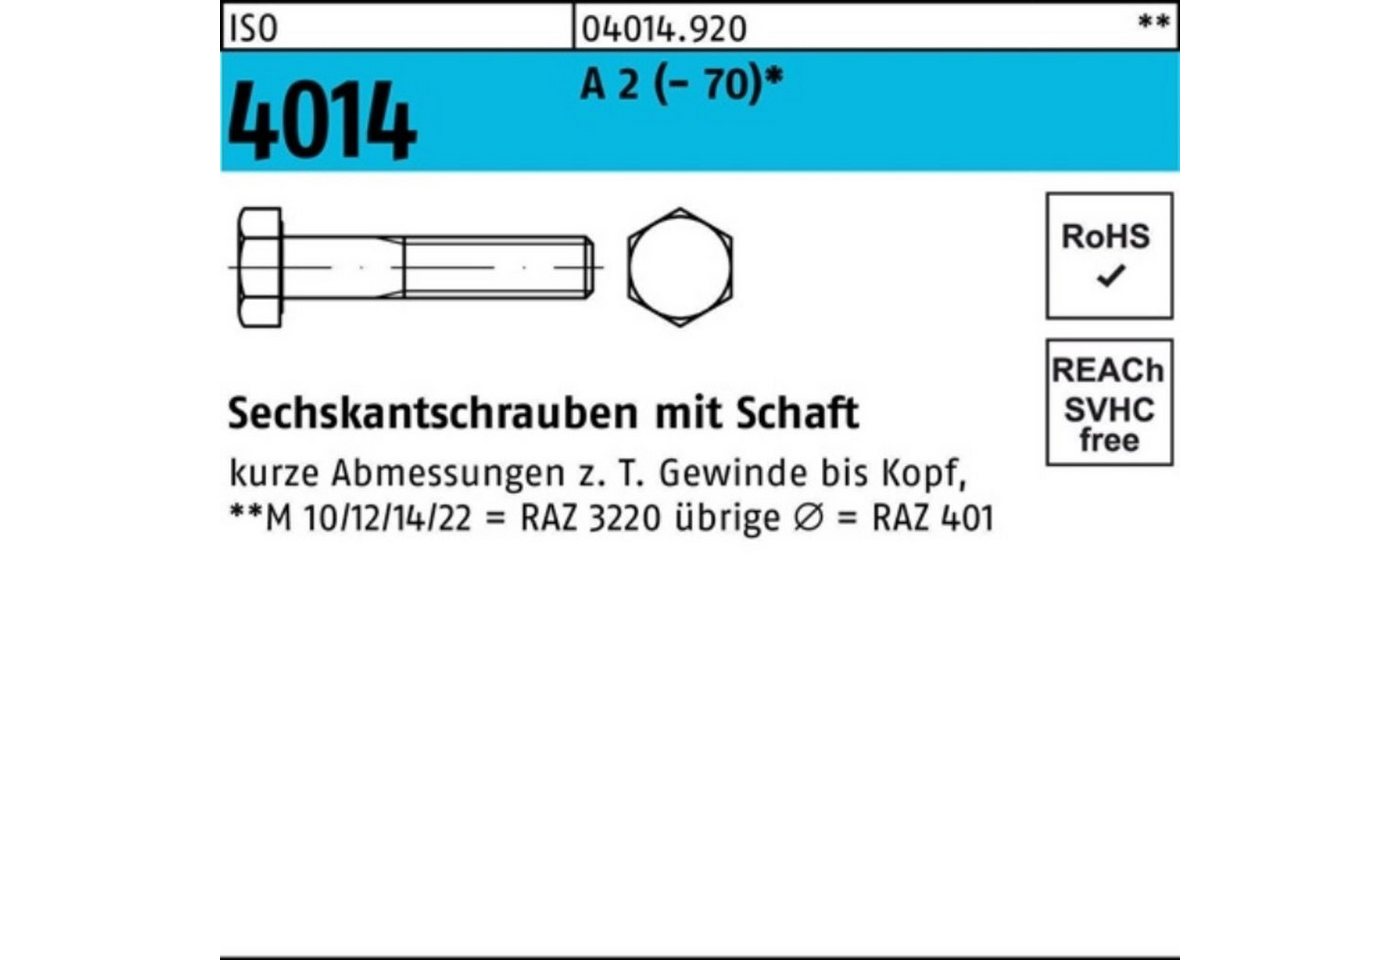 Bufab Sechskantschraube 100er Pack Sechskantschraube ISO 4014 Schaft M12x 160 A 2 (70) 1 St von Bufab